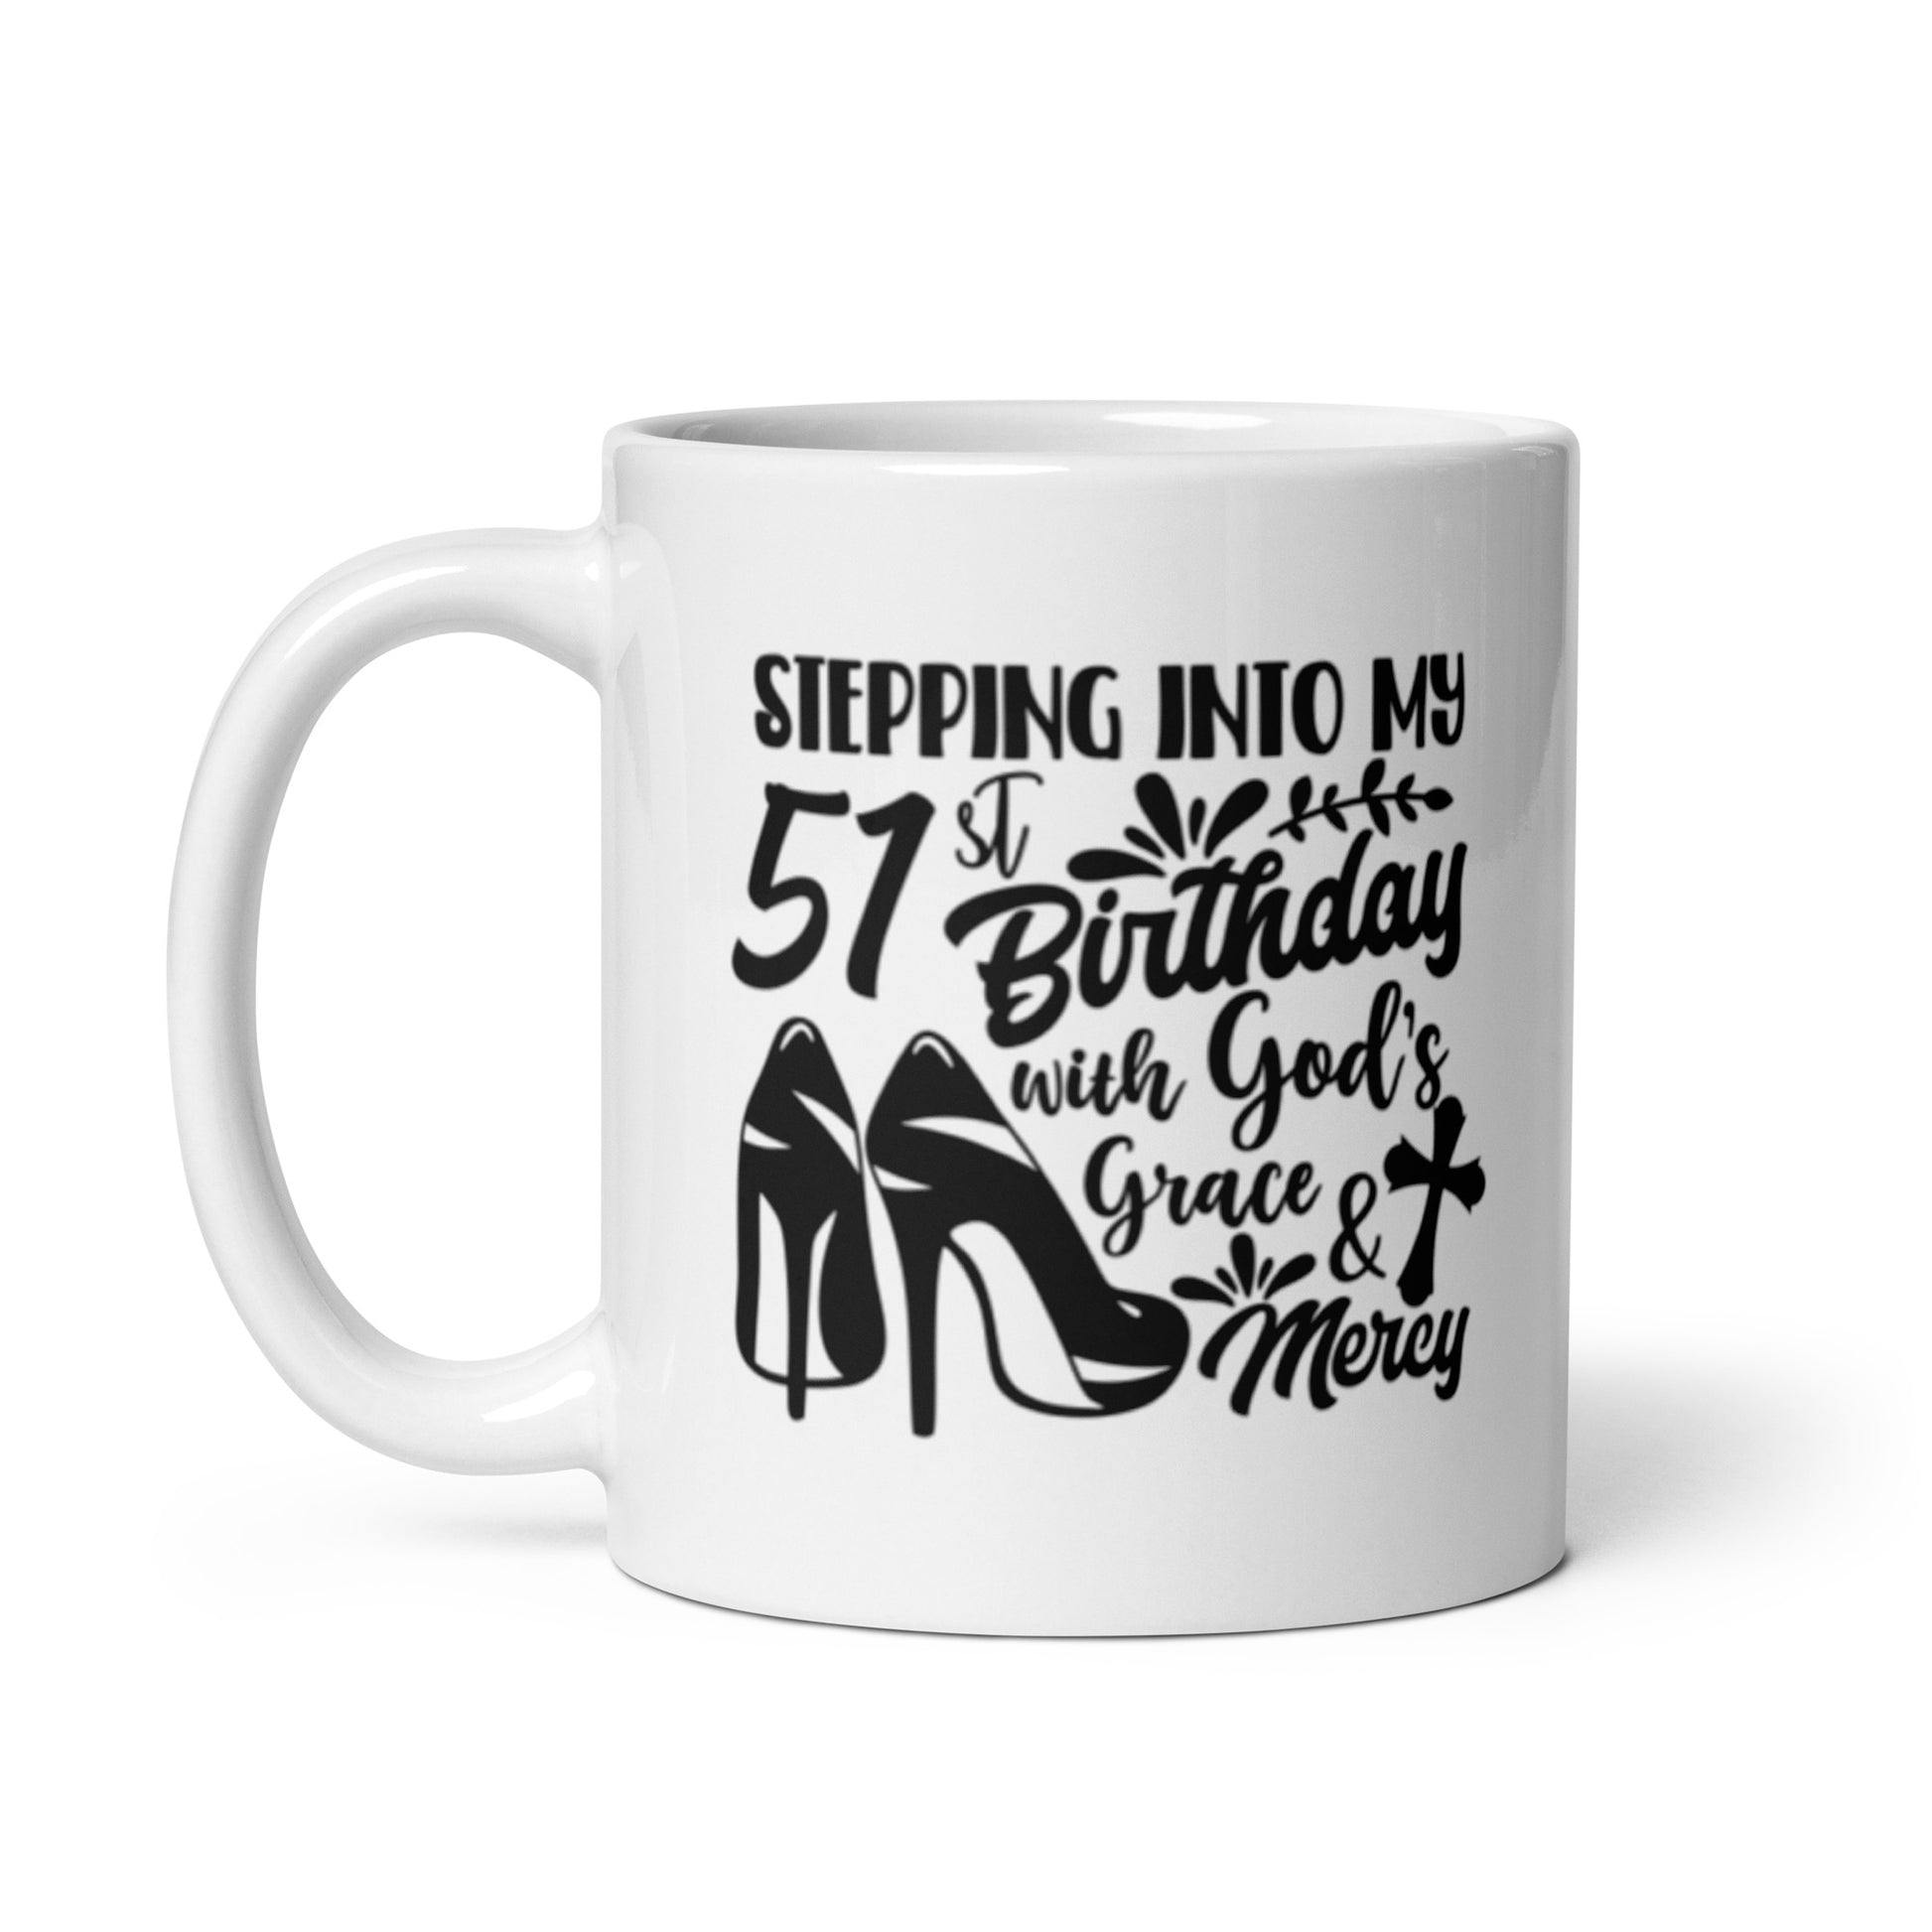 Stepping Into My 51st Birthday with God's Grace & Mercy White Ceramic Mug